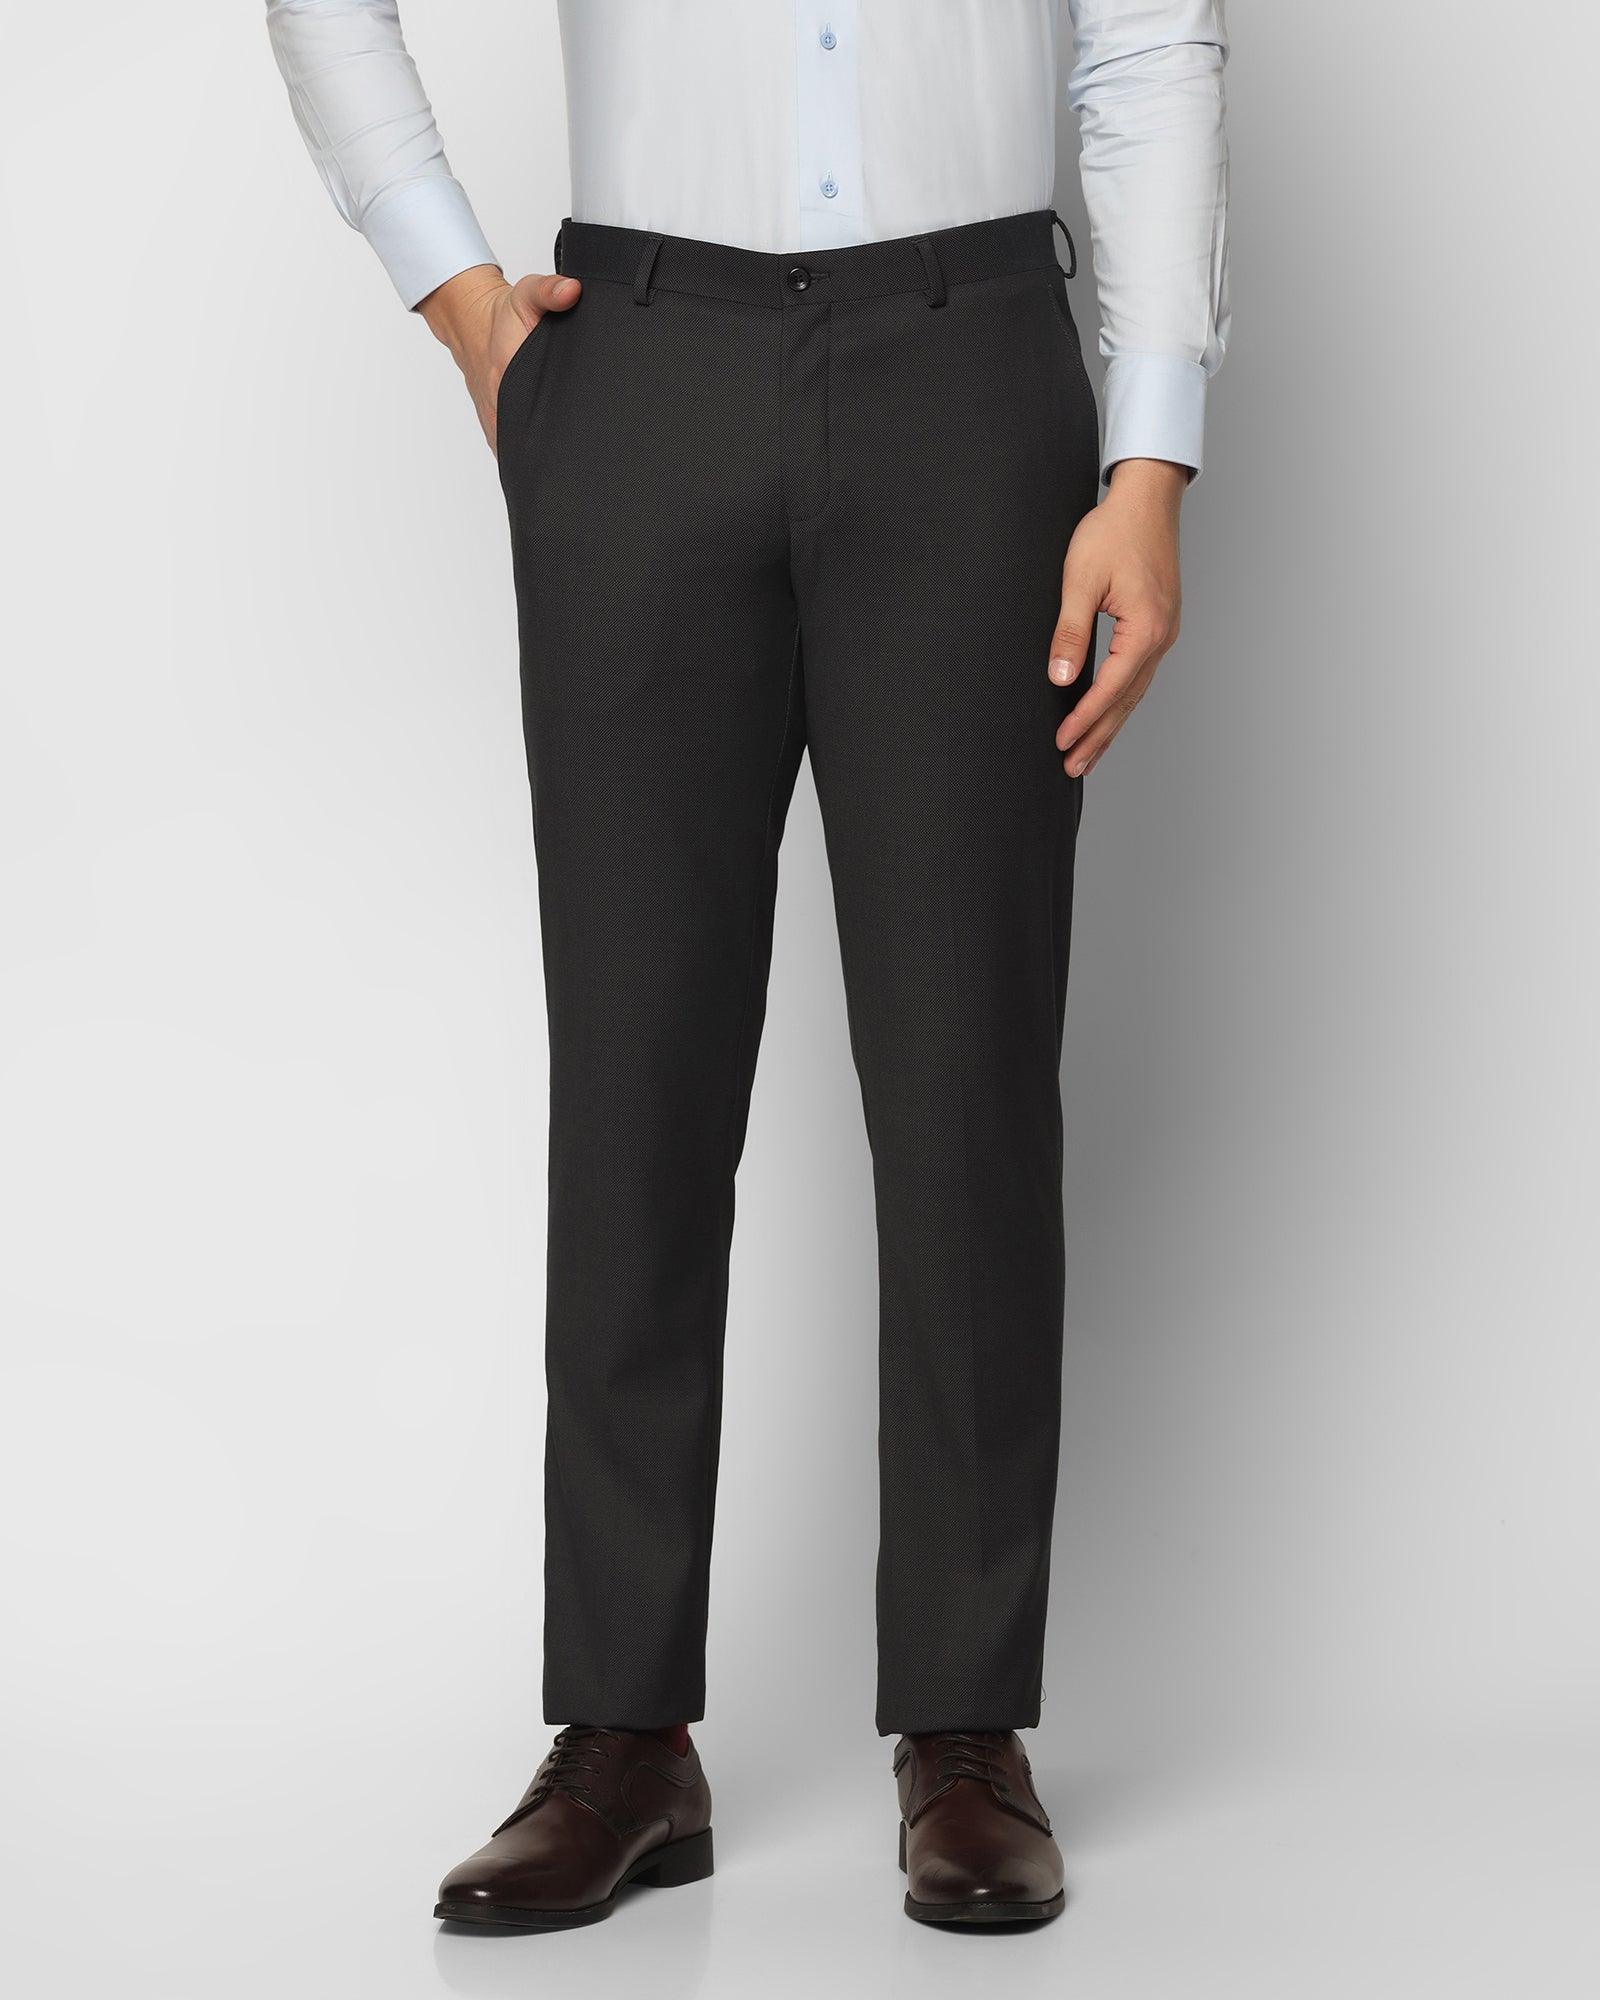 Slim Fit B-91 Formal Black Textured Trouser - Bank